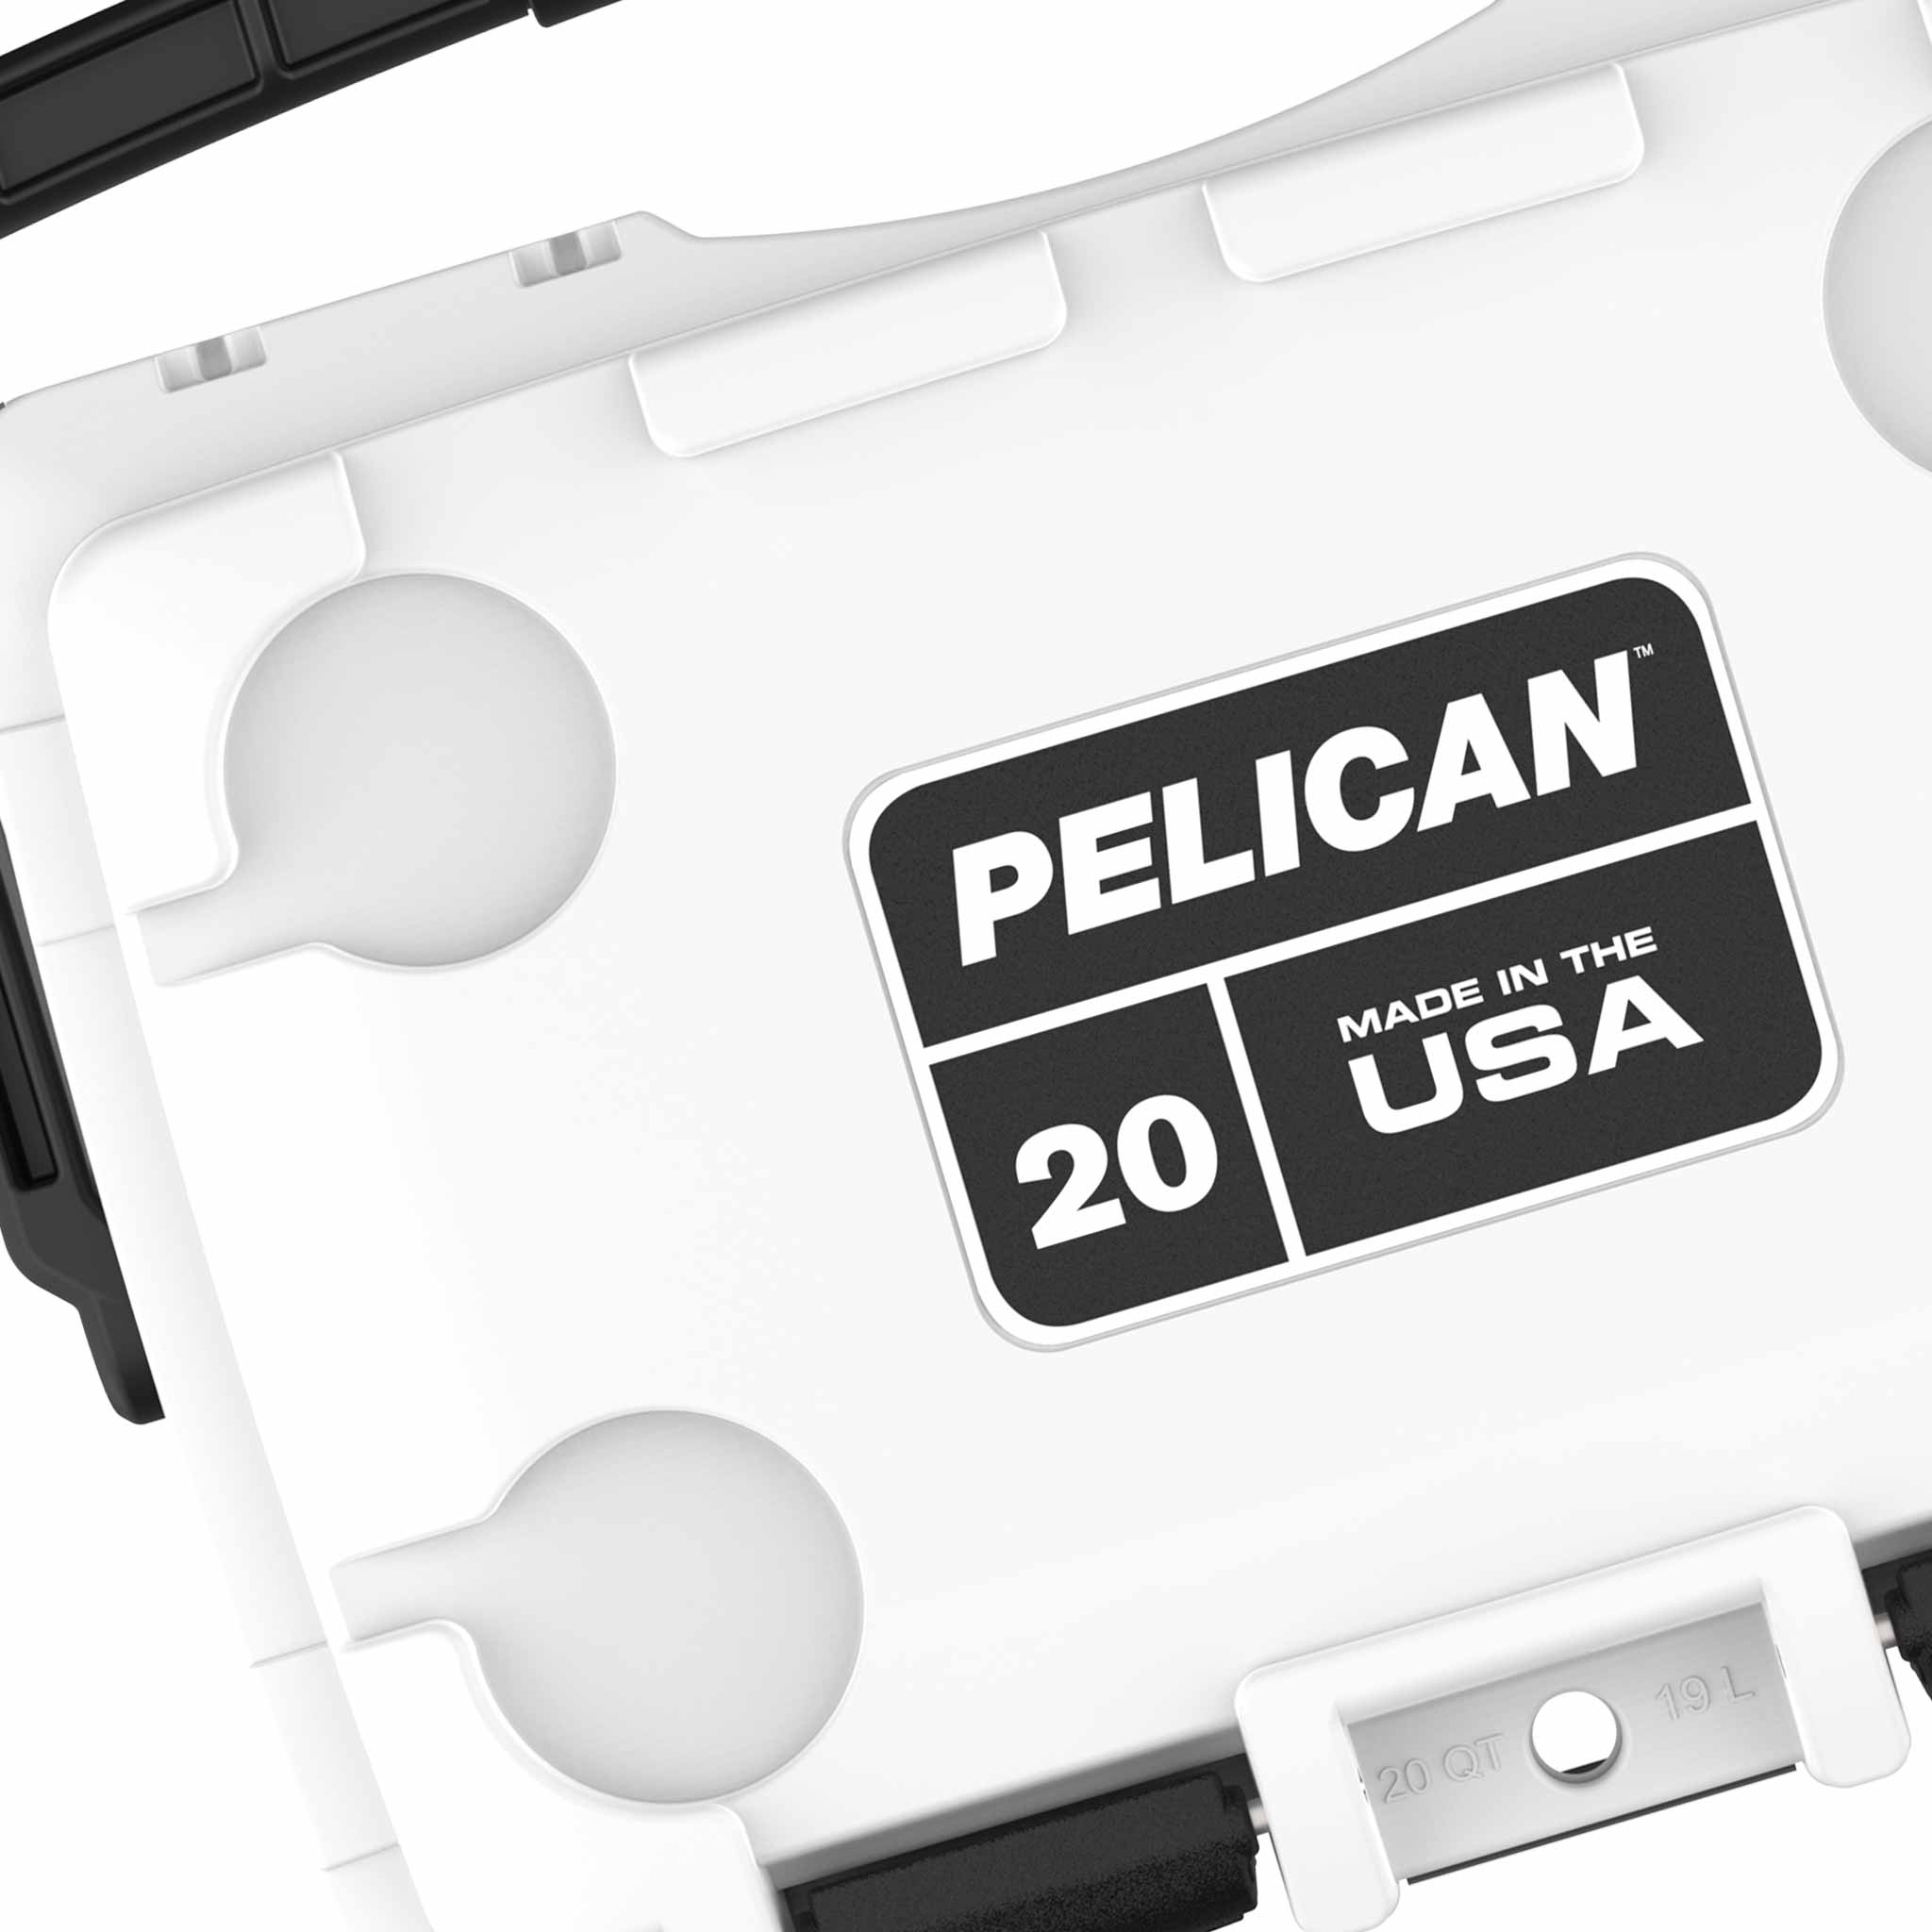 Pelican 20QT Elite Hard Cooler Assorted Colors Available